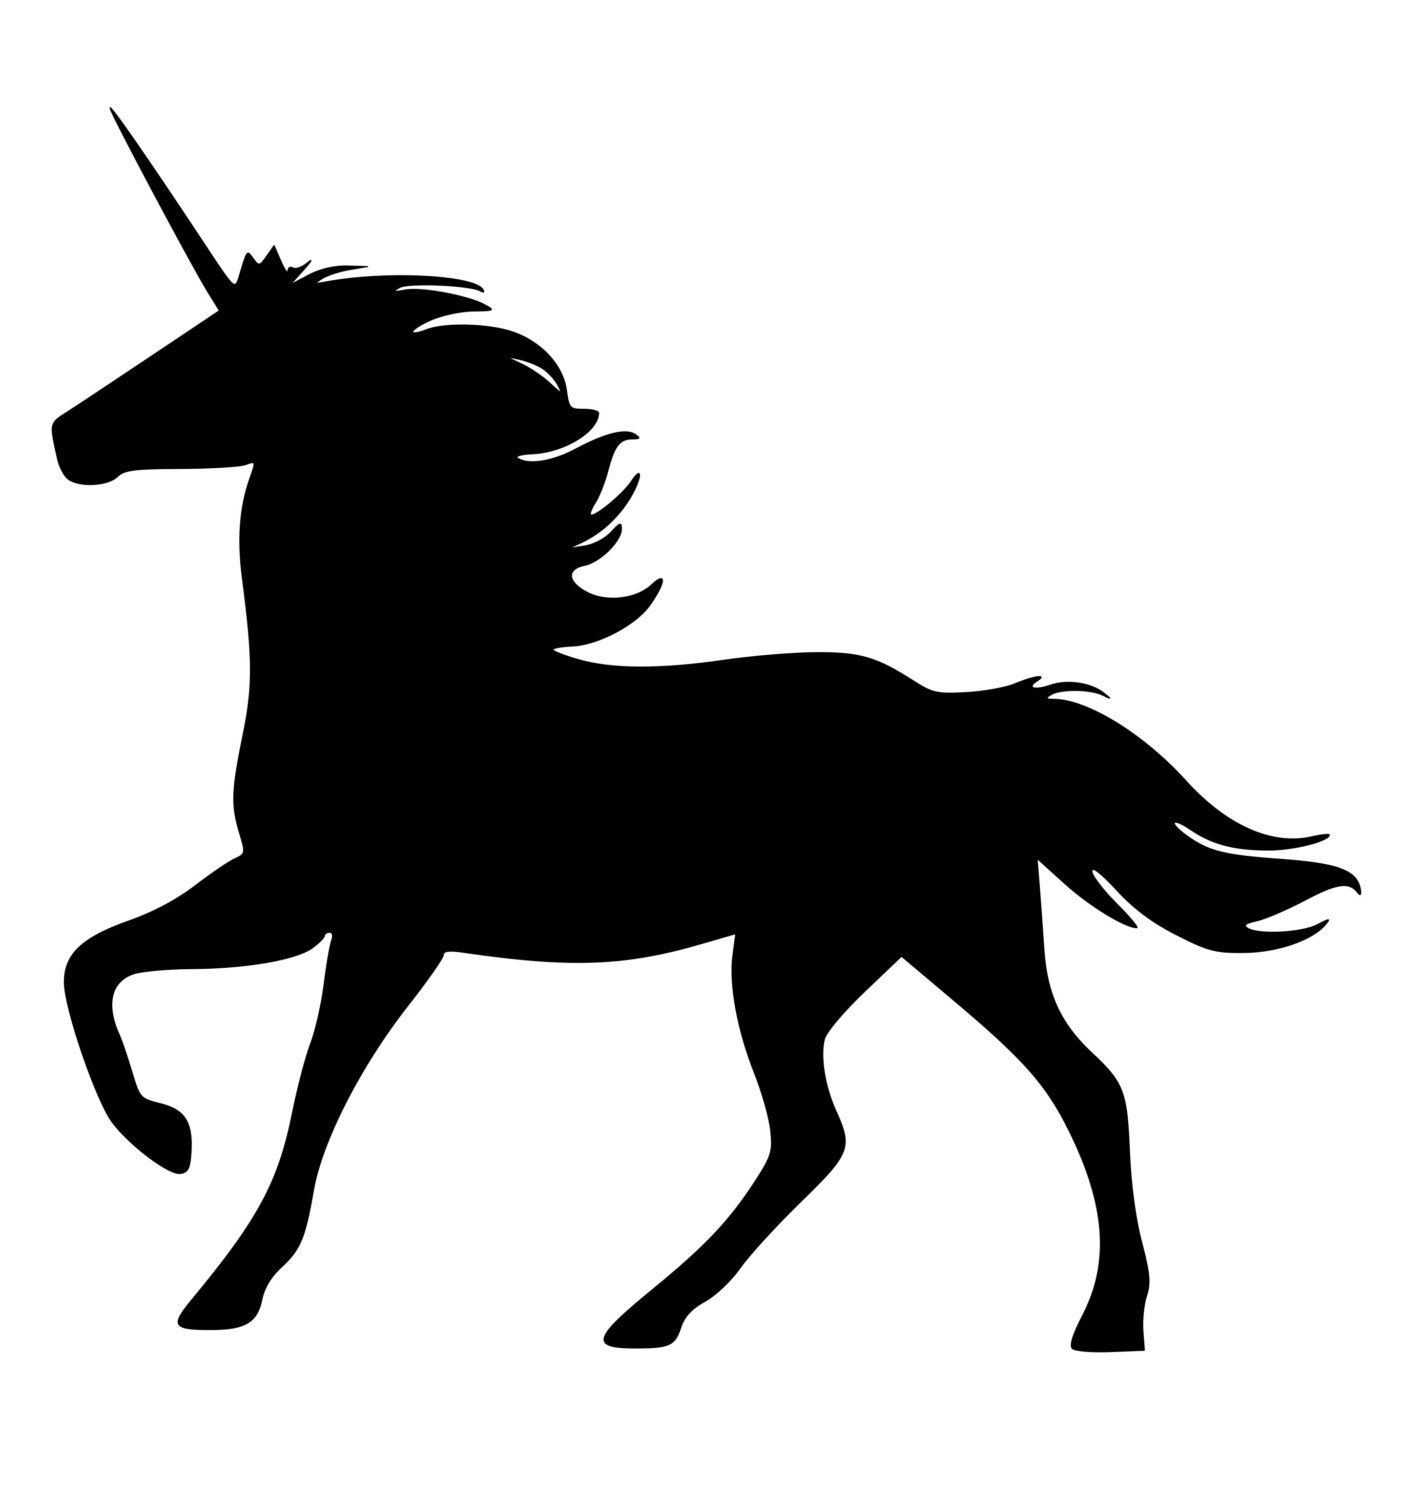 Unicorn head silhouette.